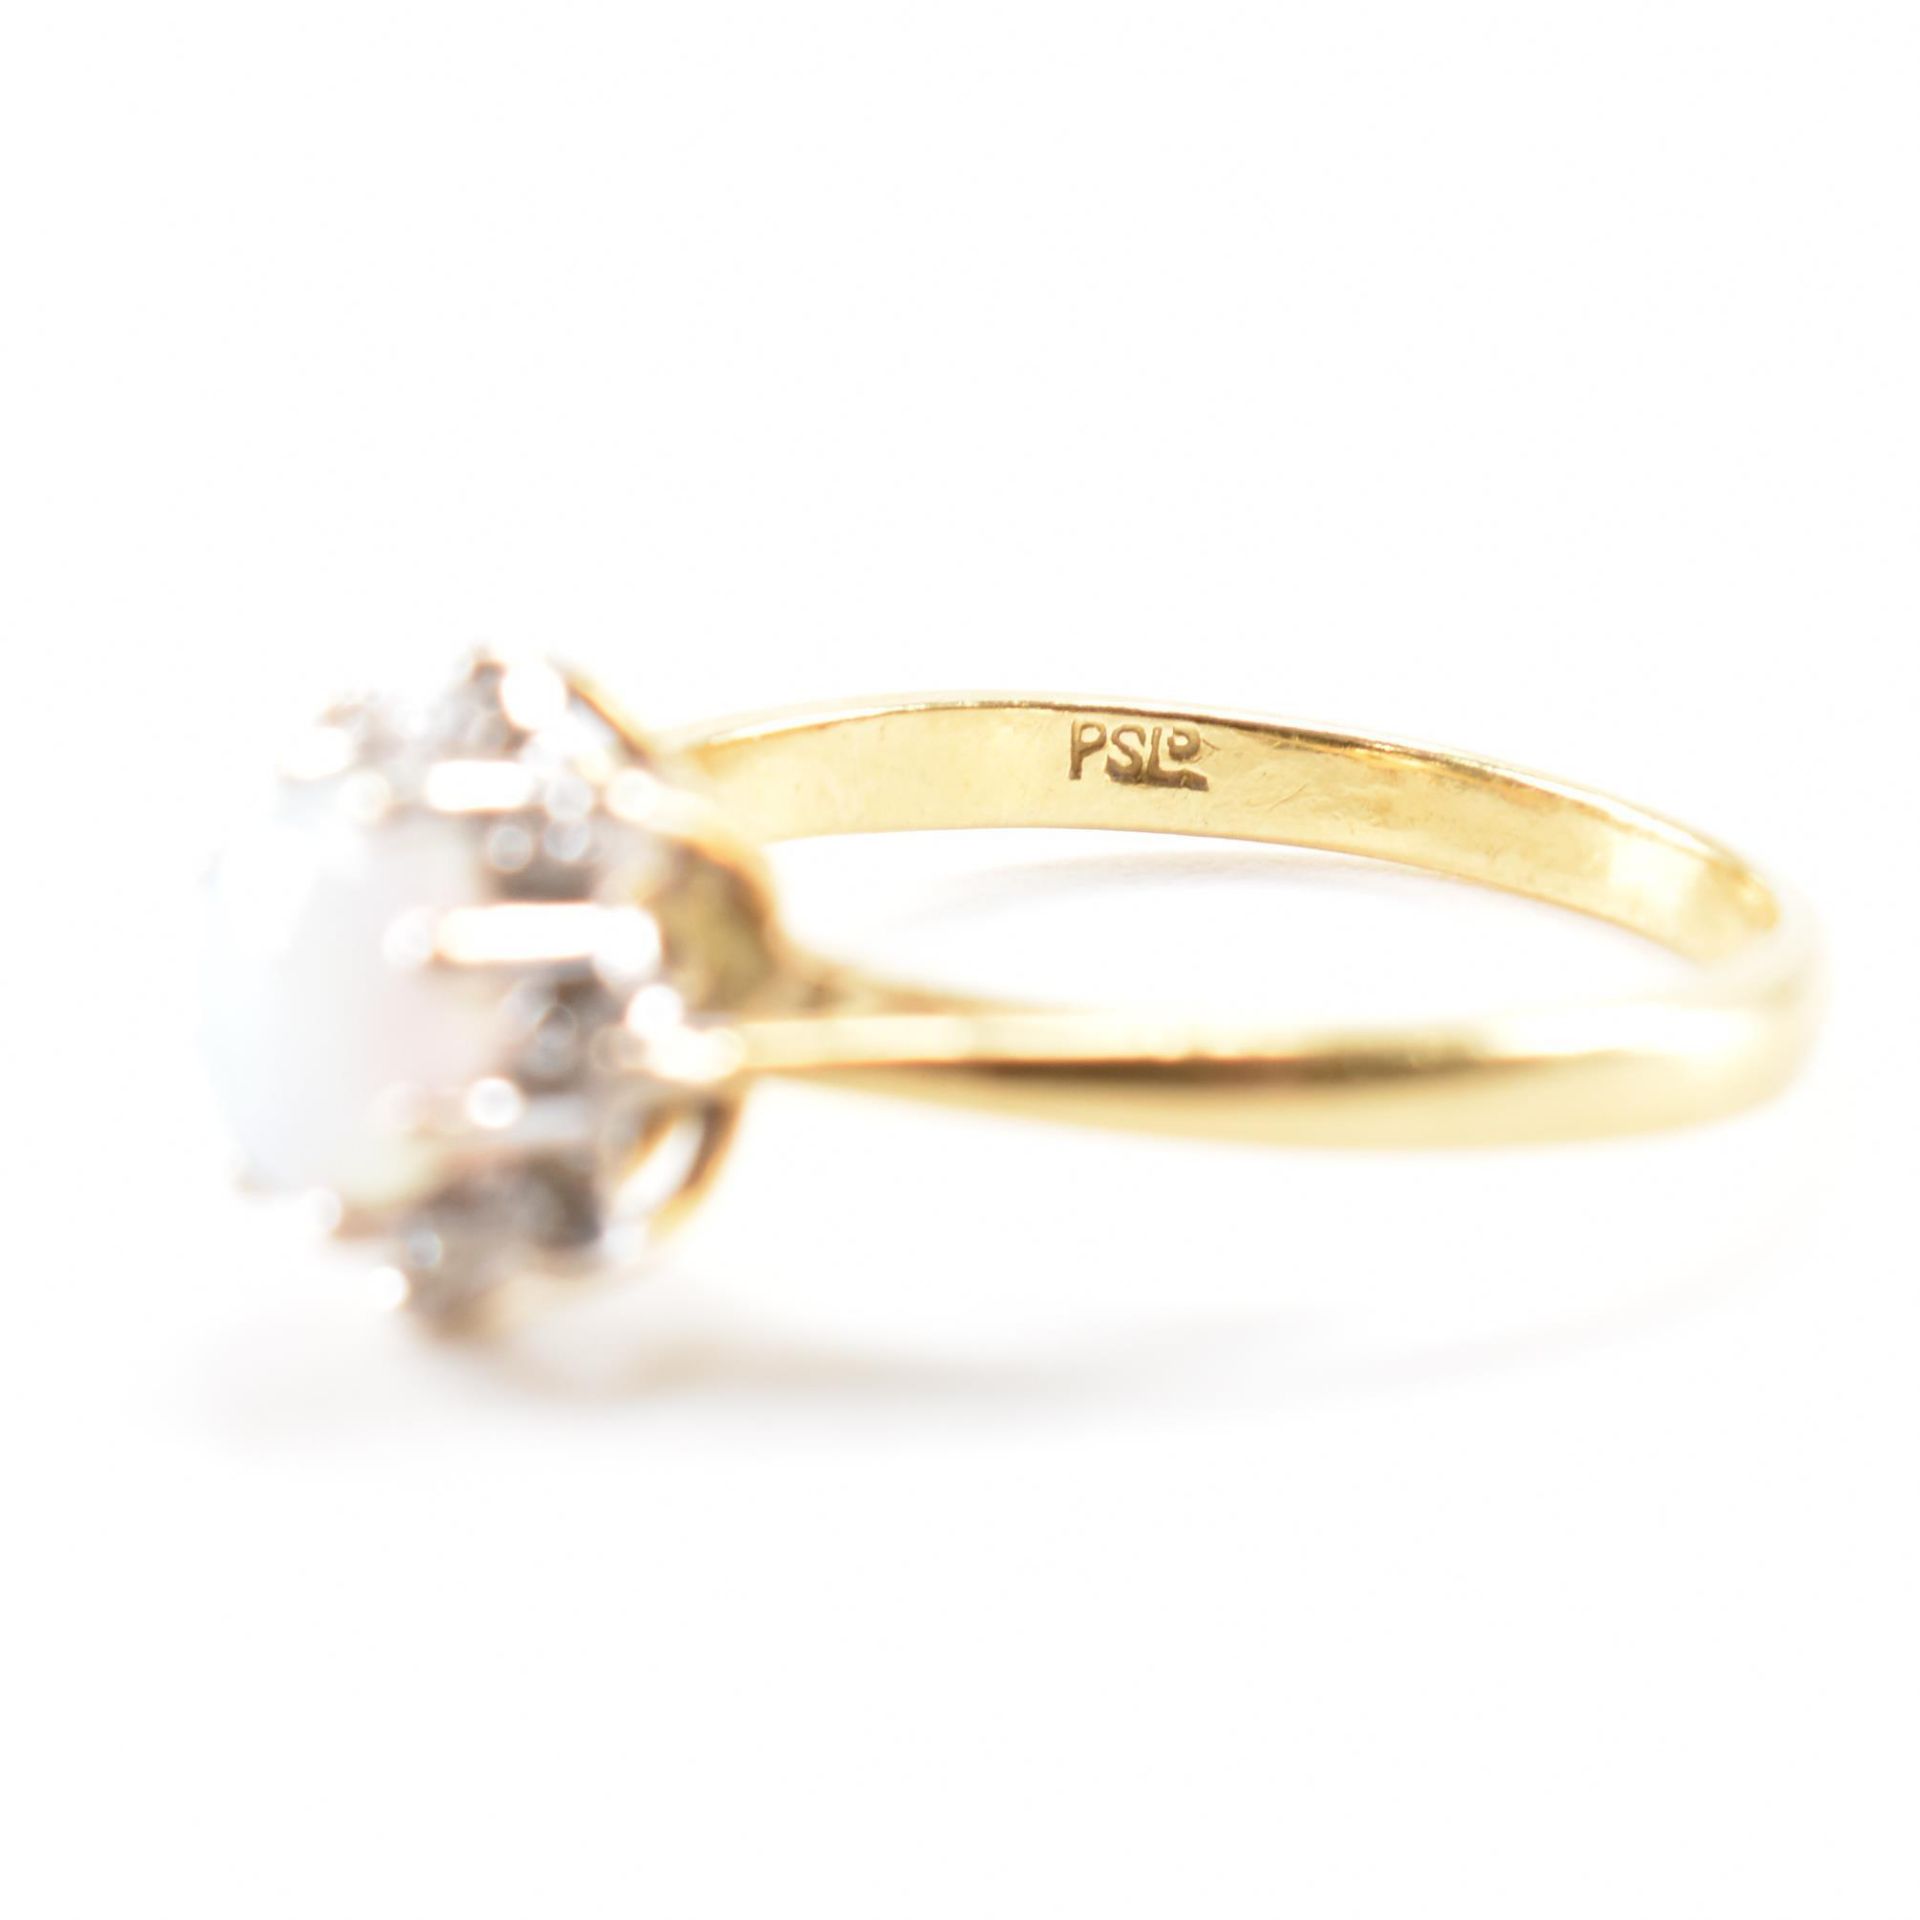 HALLMARKED 18CT GOLD OPAL & DIAMOND RING - Image 7 of 8